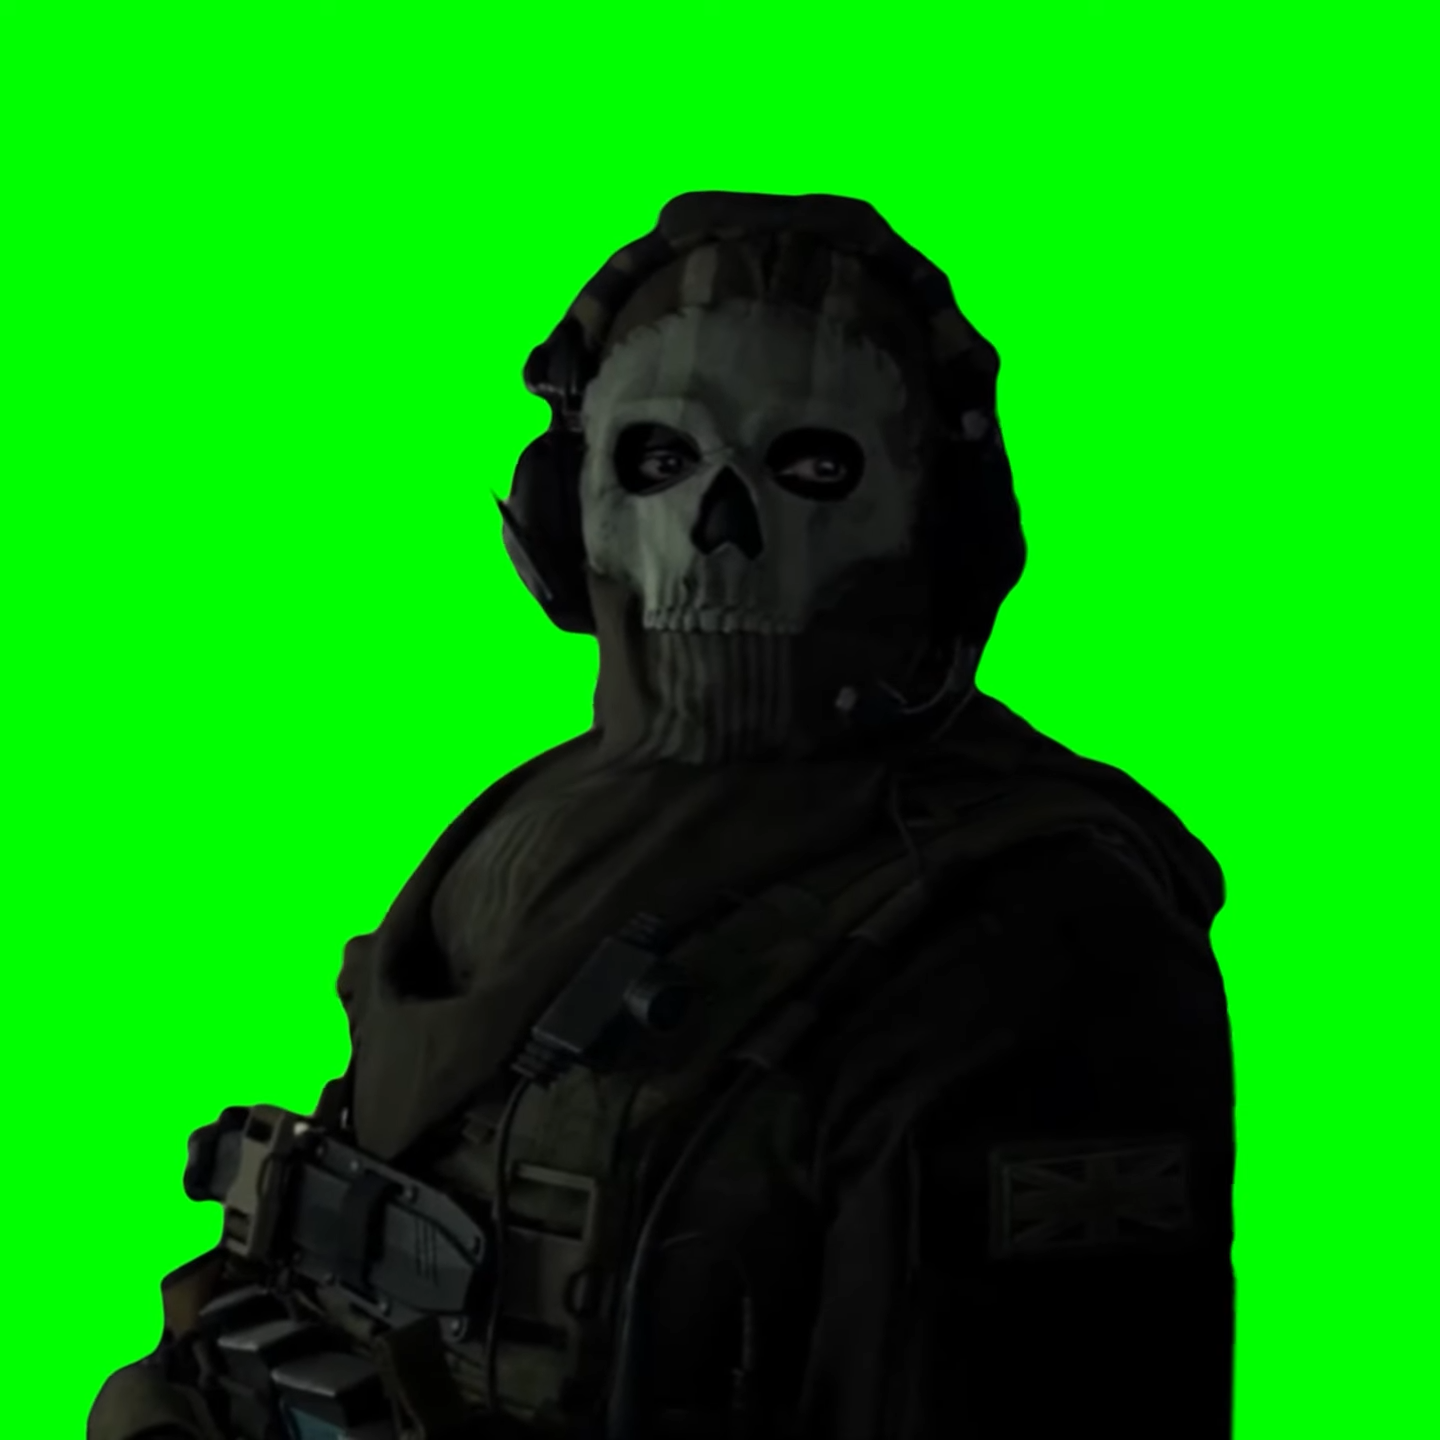 Modern Warfare 2's Ghost And Soap Side-Eye Moment Is Getting Memed